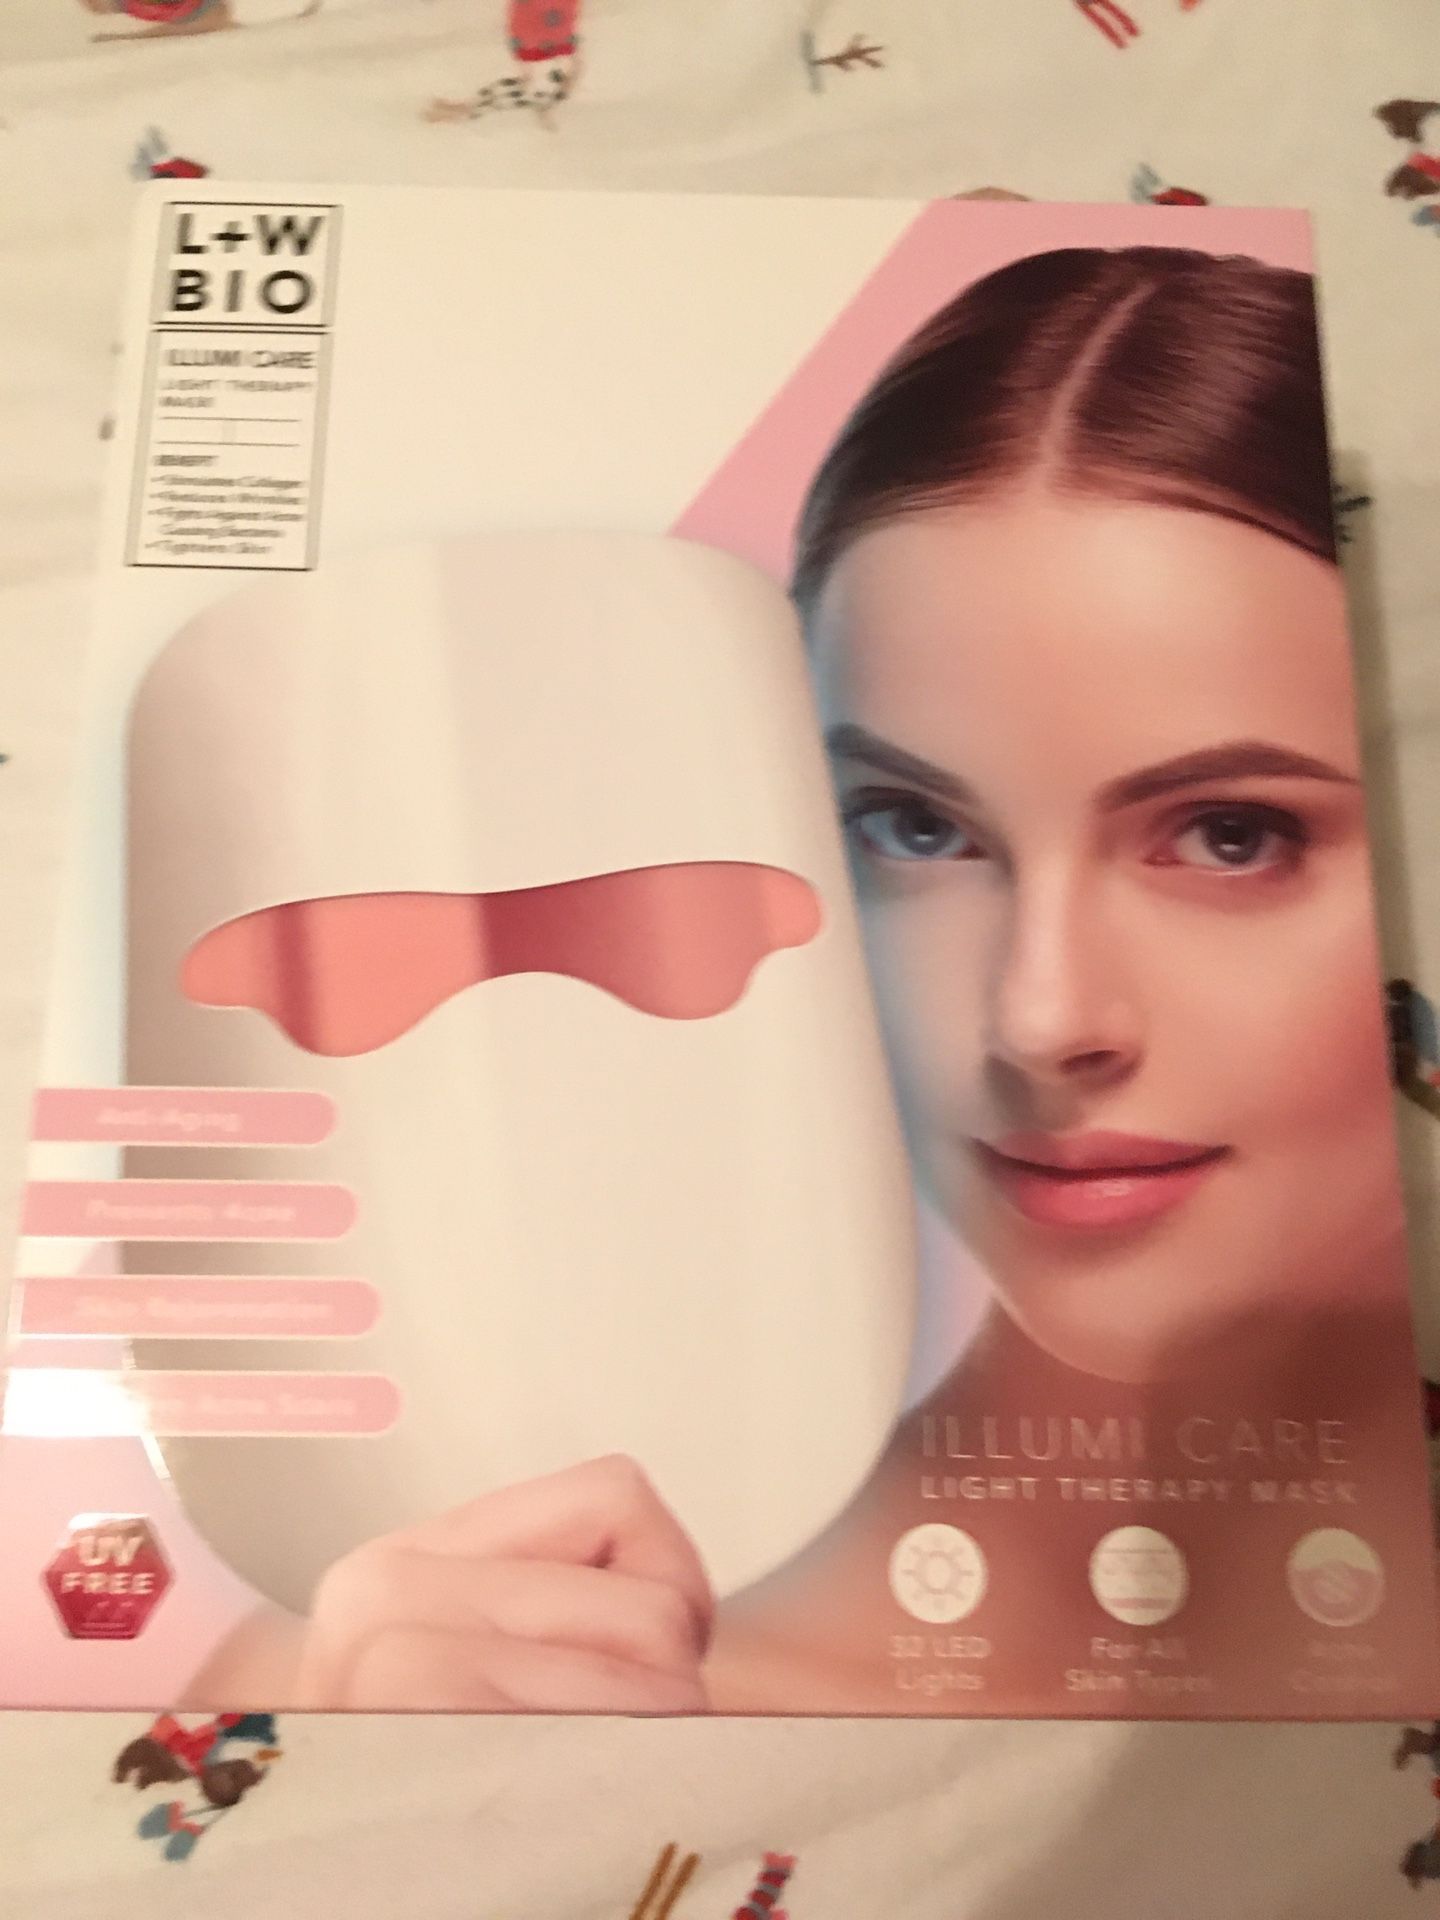 Illuminate Care Light Therapy Mask